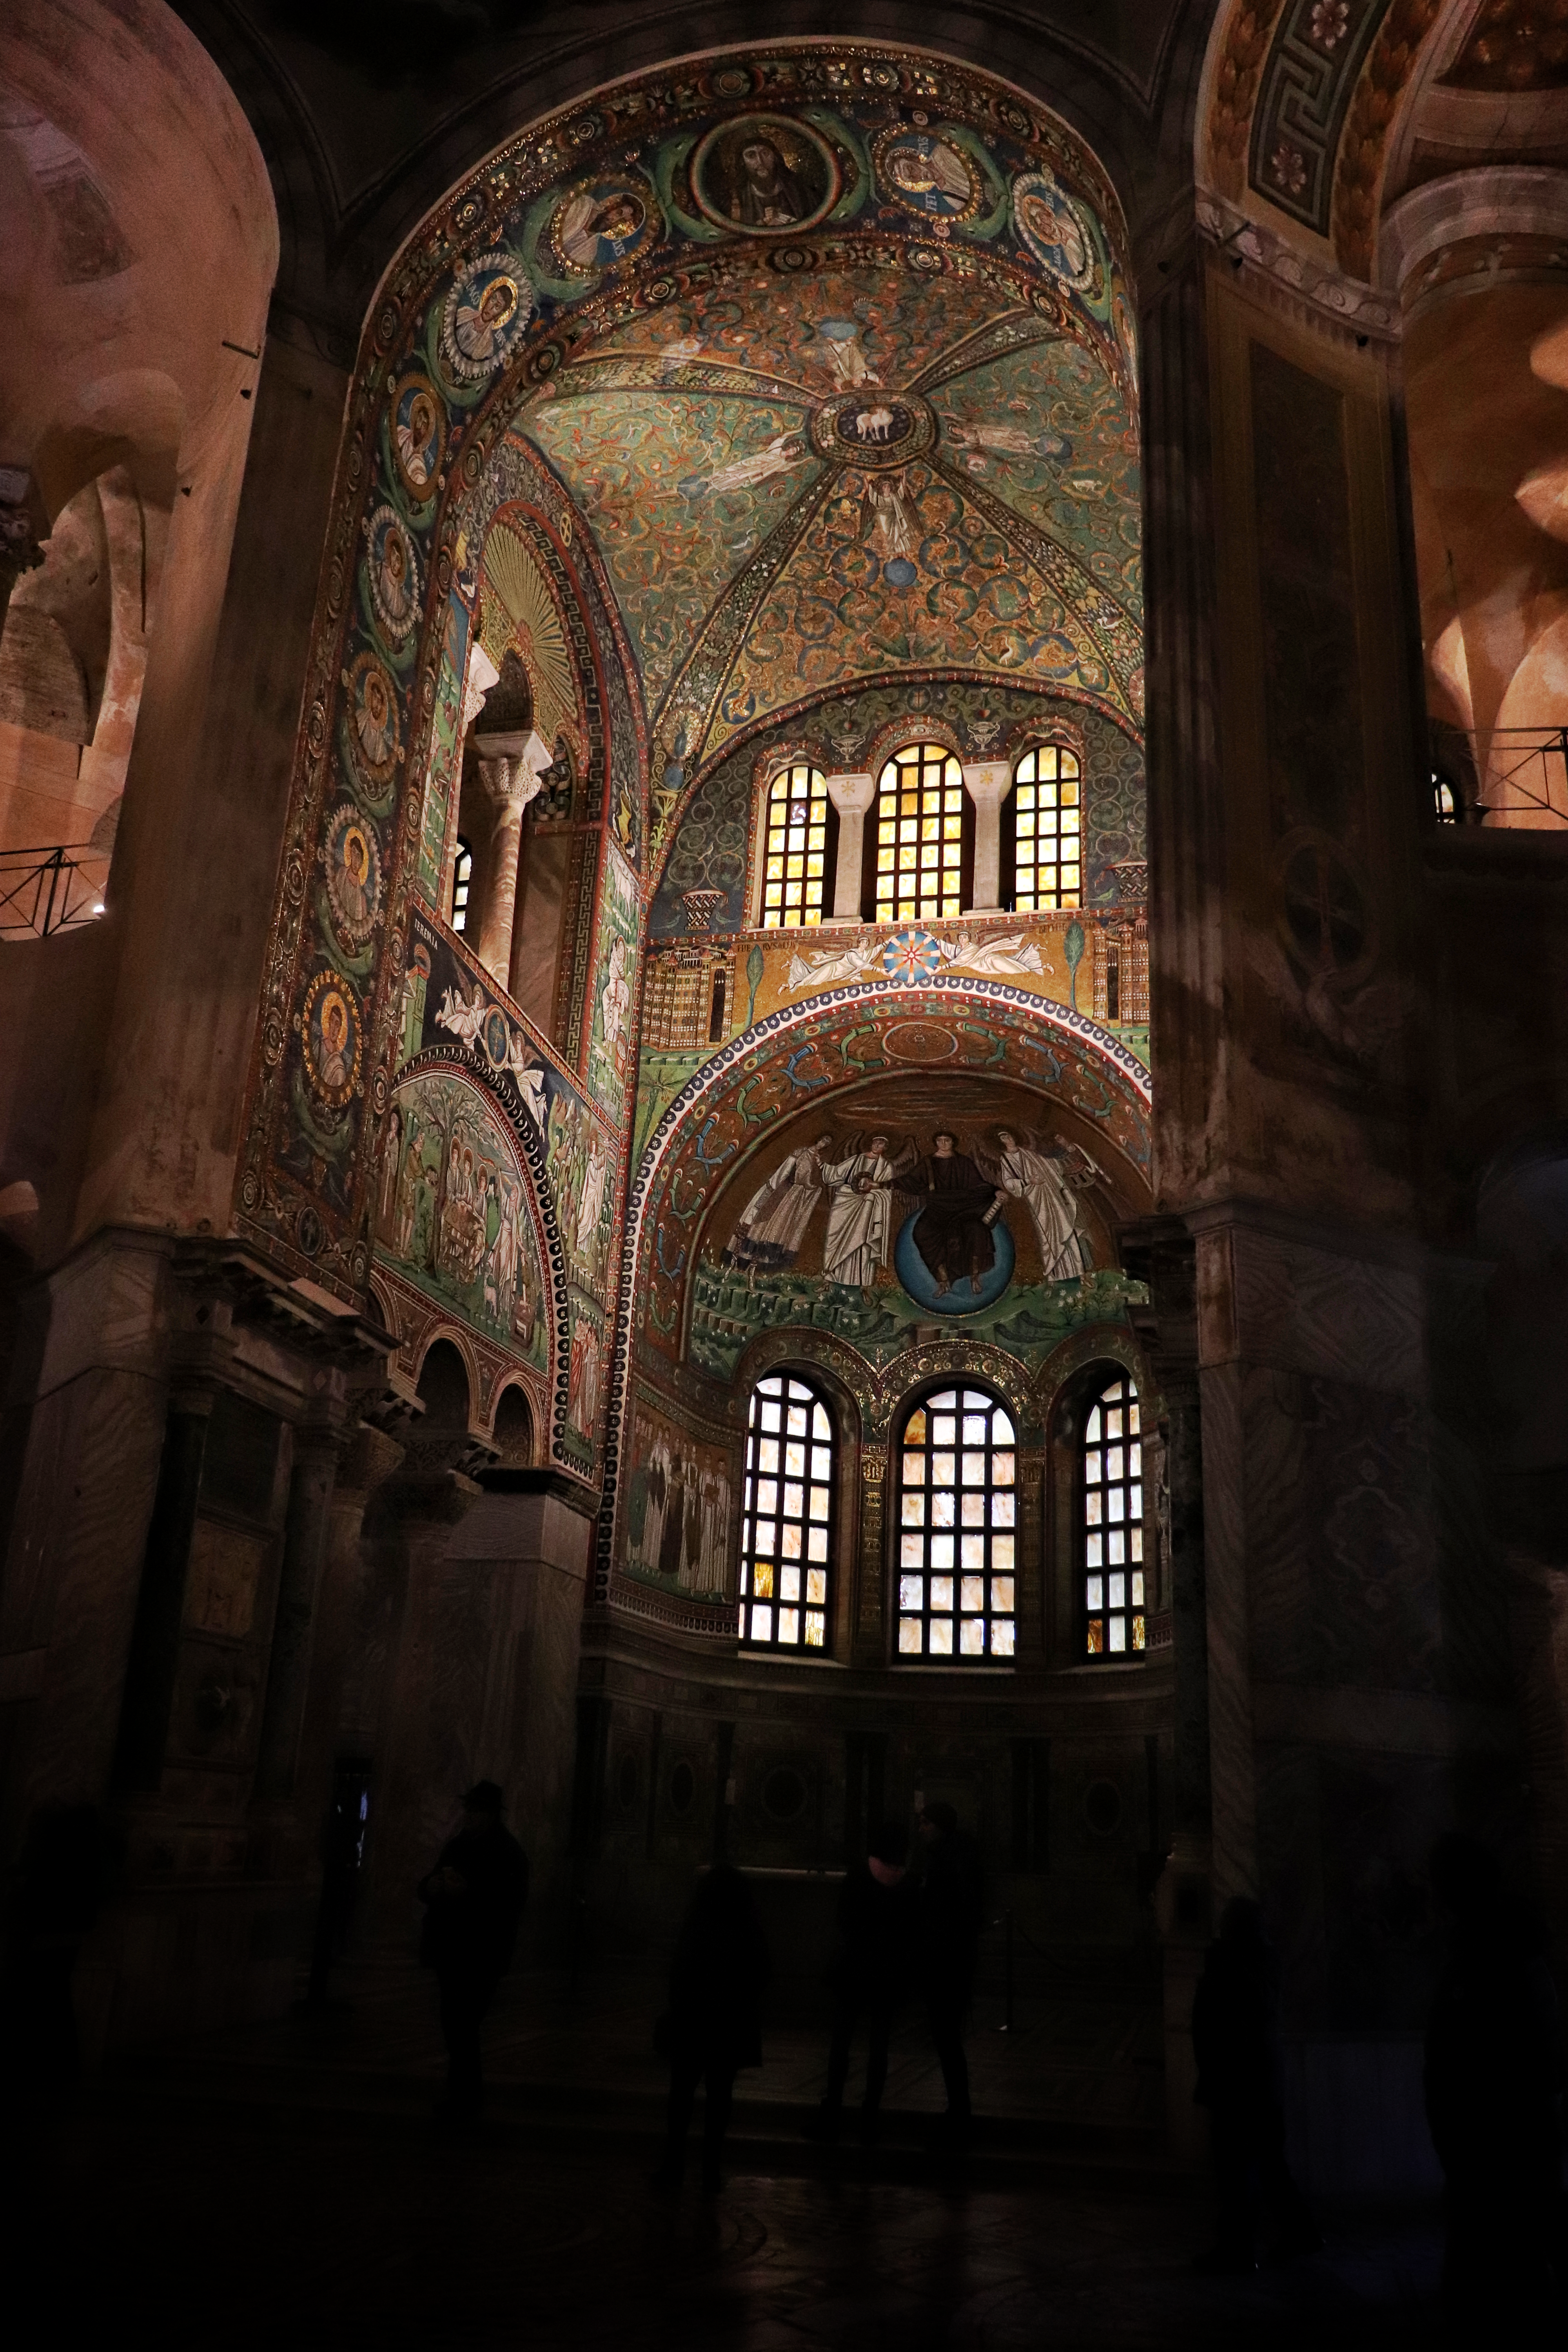 photo: https://upload.wikimedia.org/wikipedia/commons/d/d3/Basilica_di_San_Vitale%2C_Ravenna_%28abside%29.png